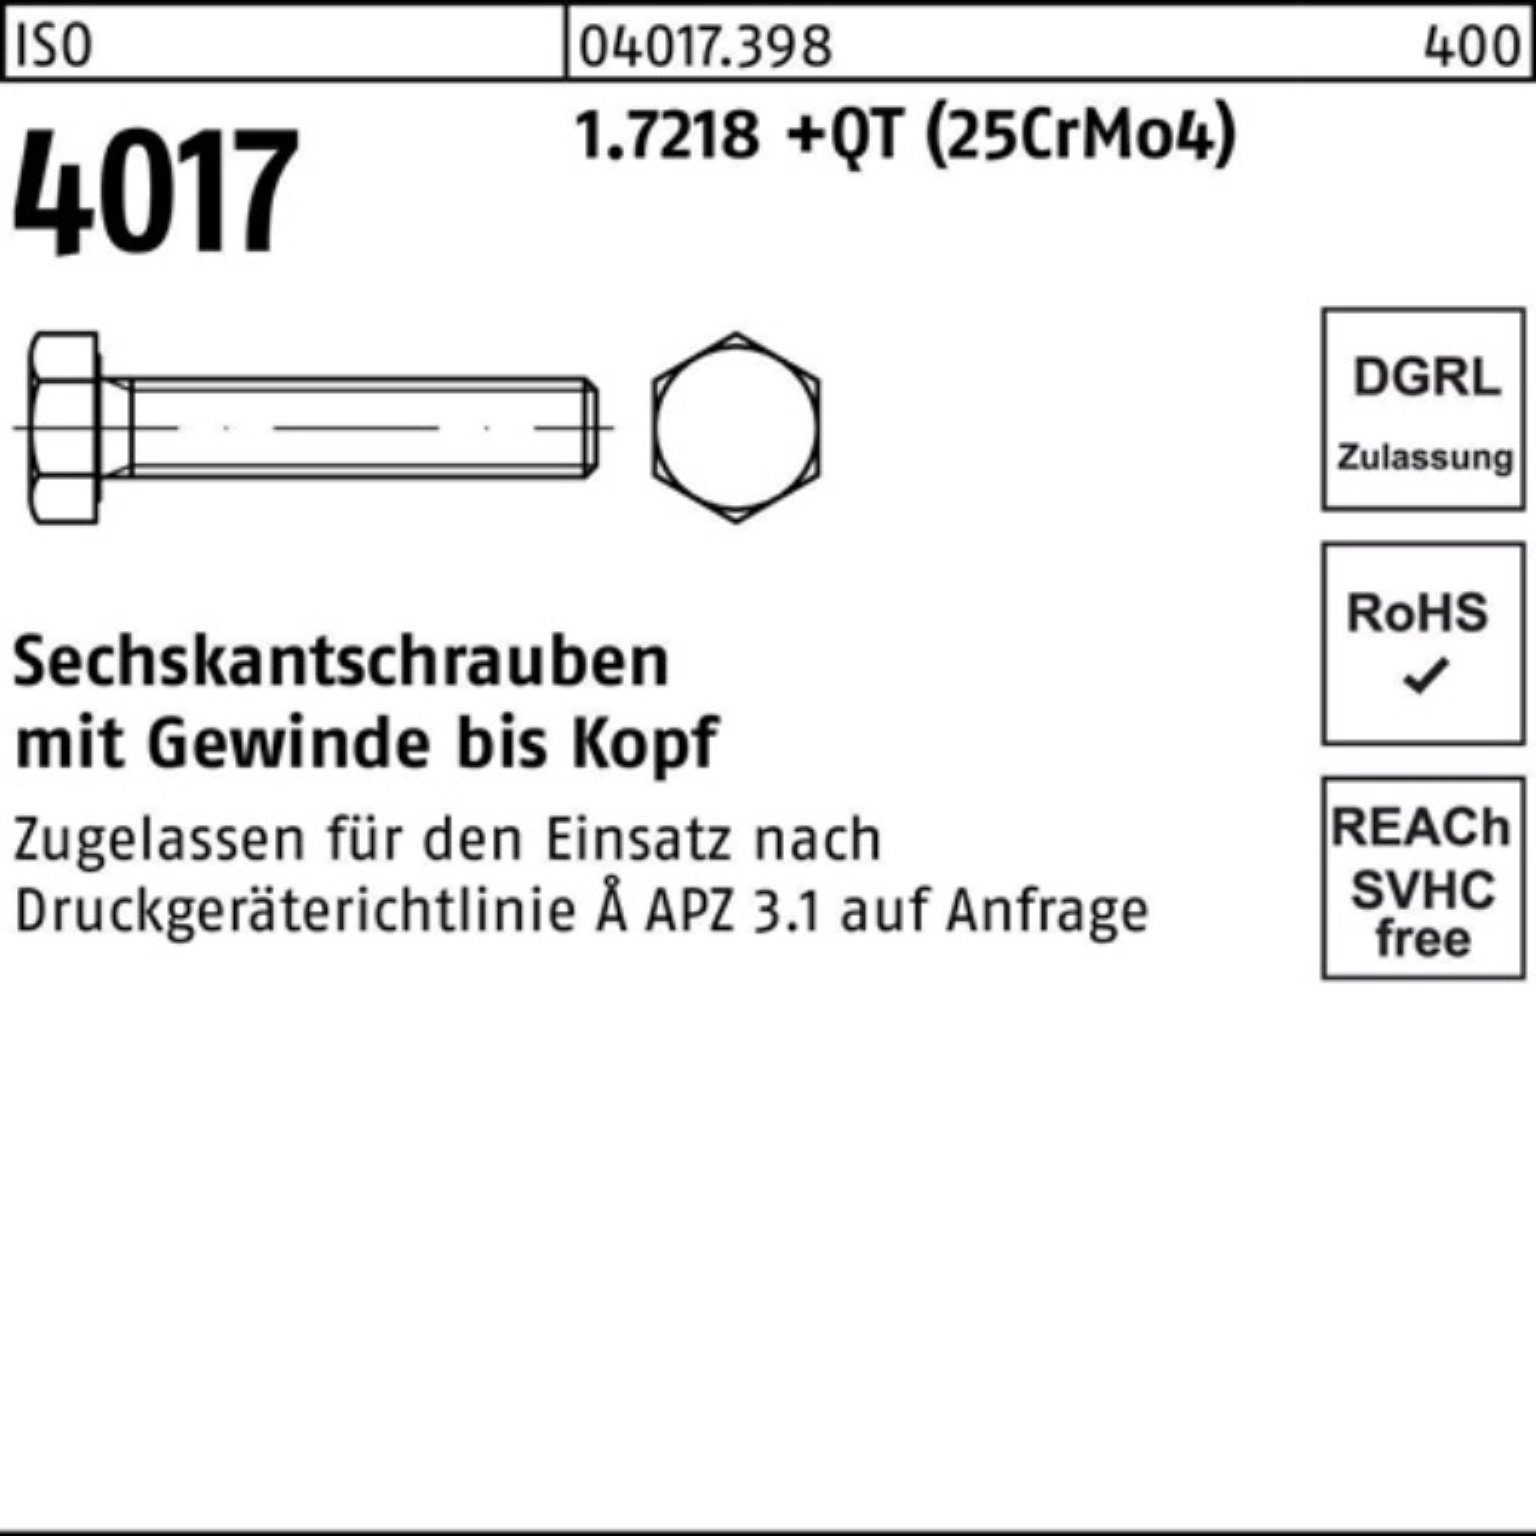 Bufab Sechskantschraube 100er Pack 4017 Sechskantschraube (25CrMo4) M33x ISO 130 +QT VG 1.7218